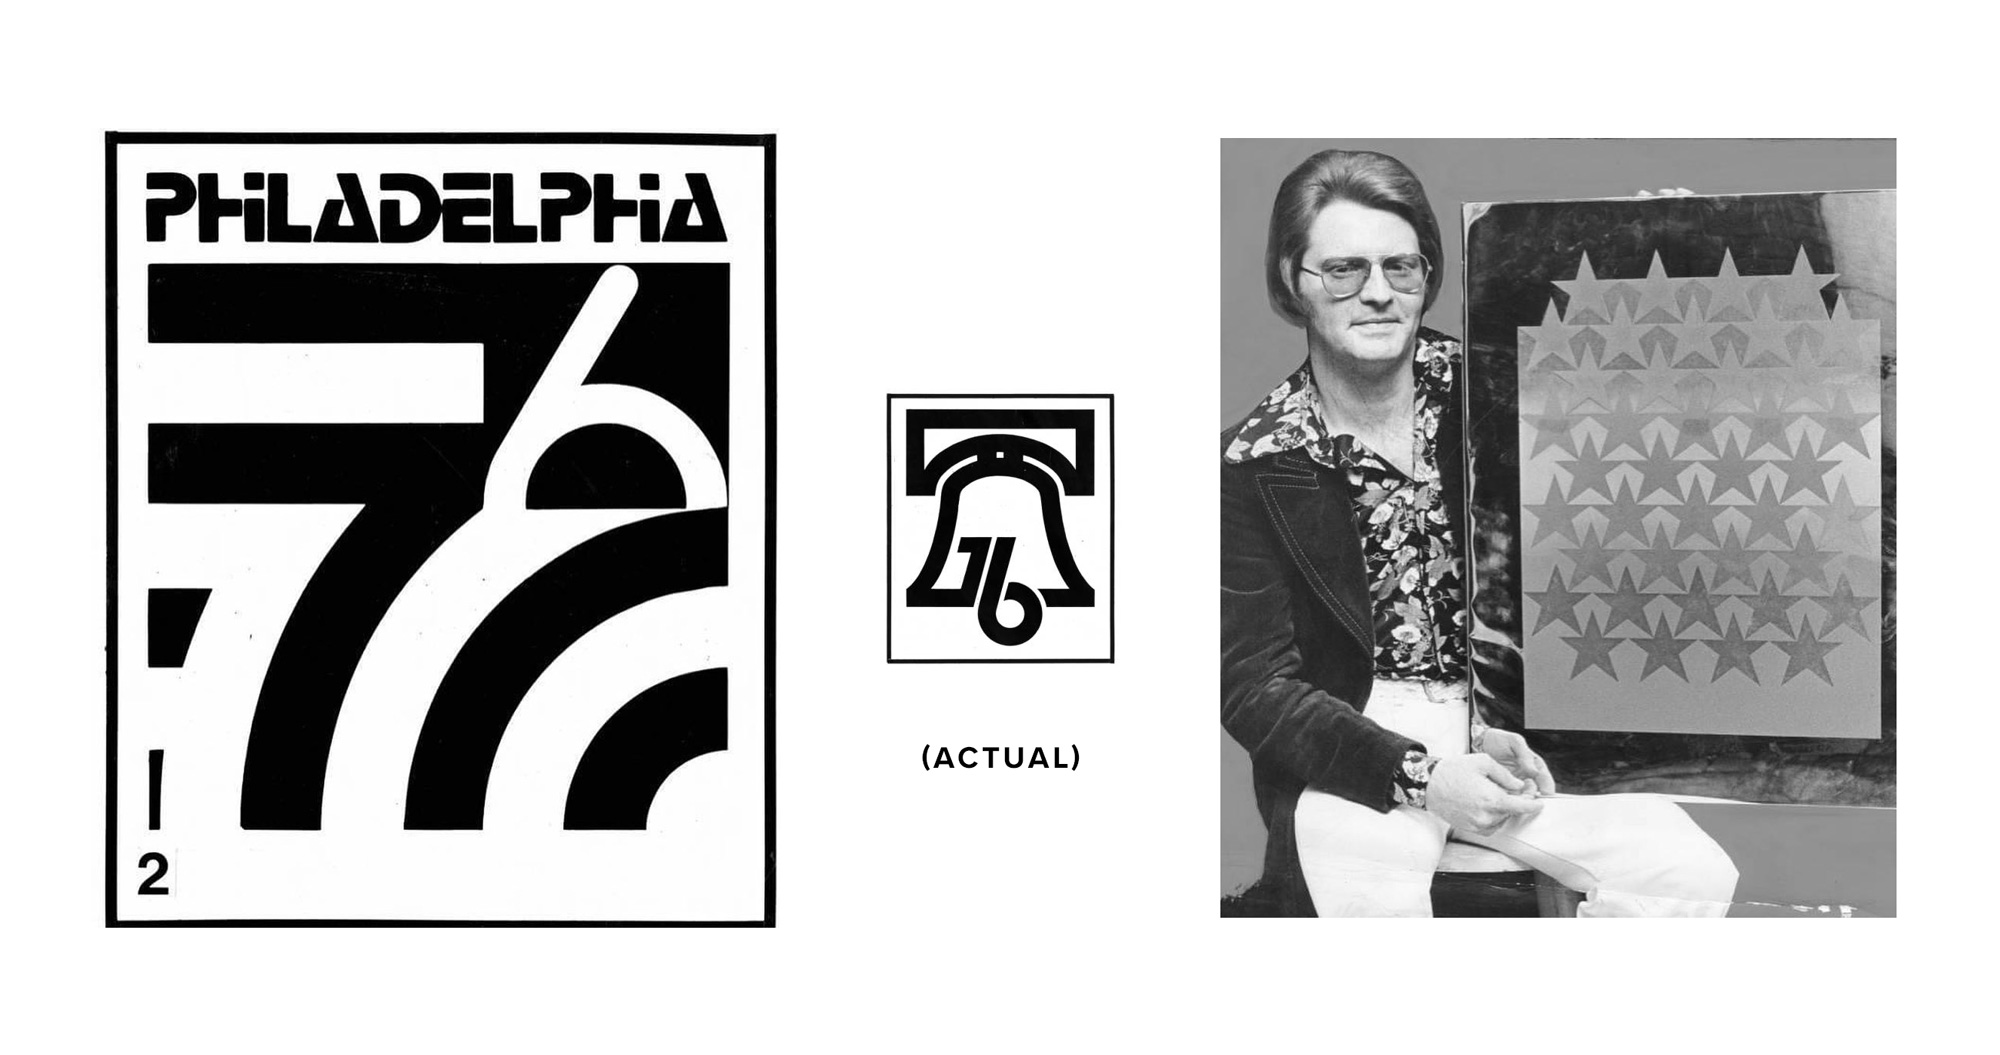 Philadelphia’s Bicentennial Logo Entries